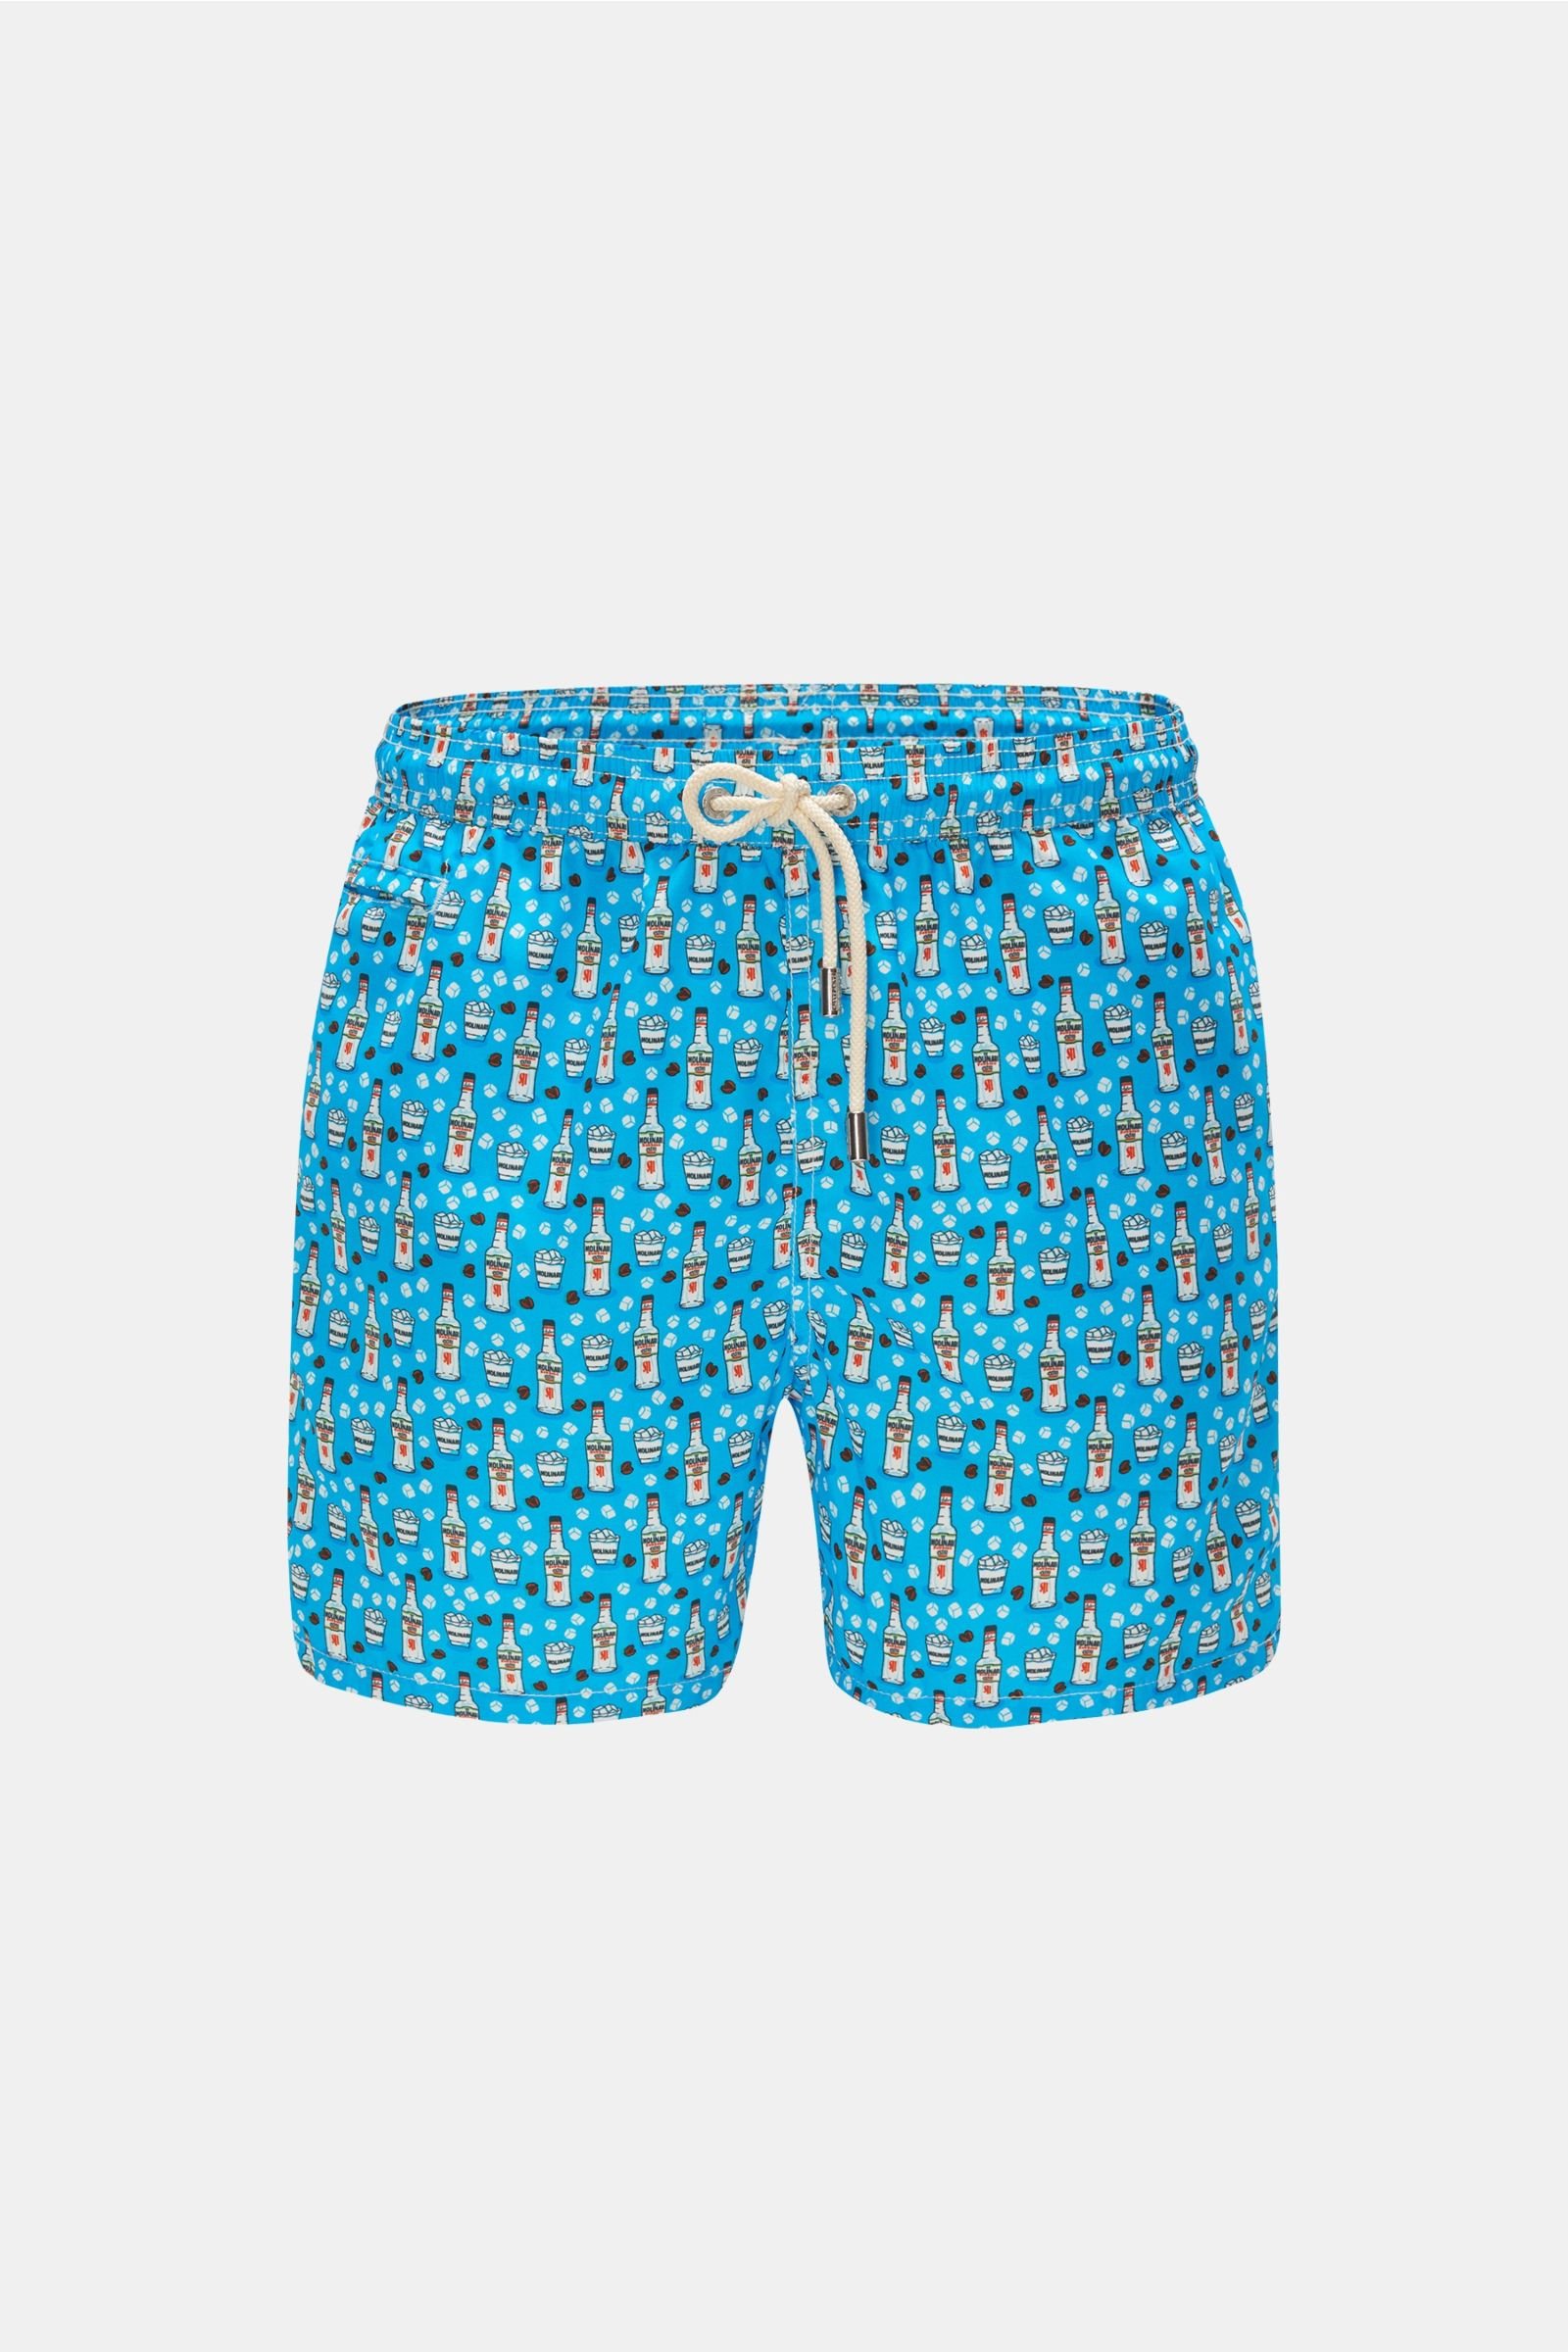 Swim shorts 'Sambuca Molinari' turquoise patterned